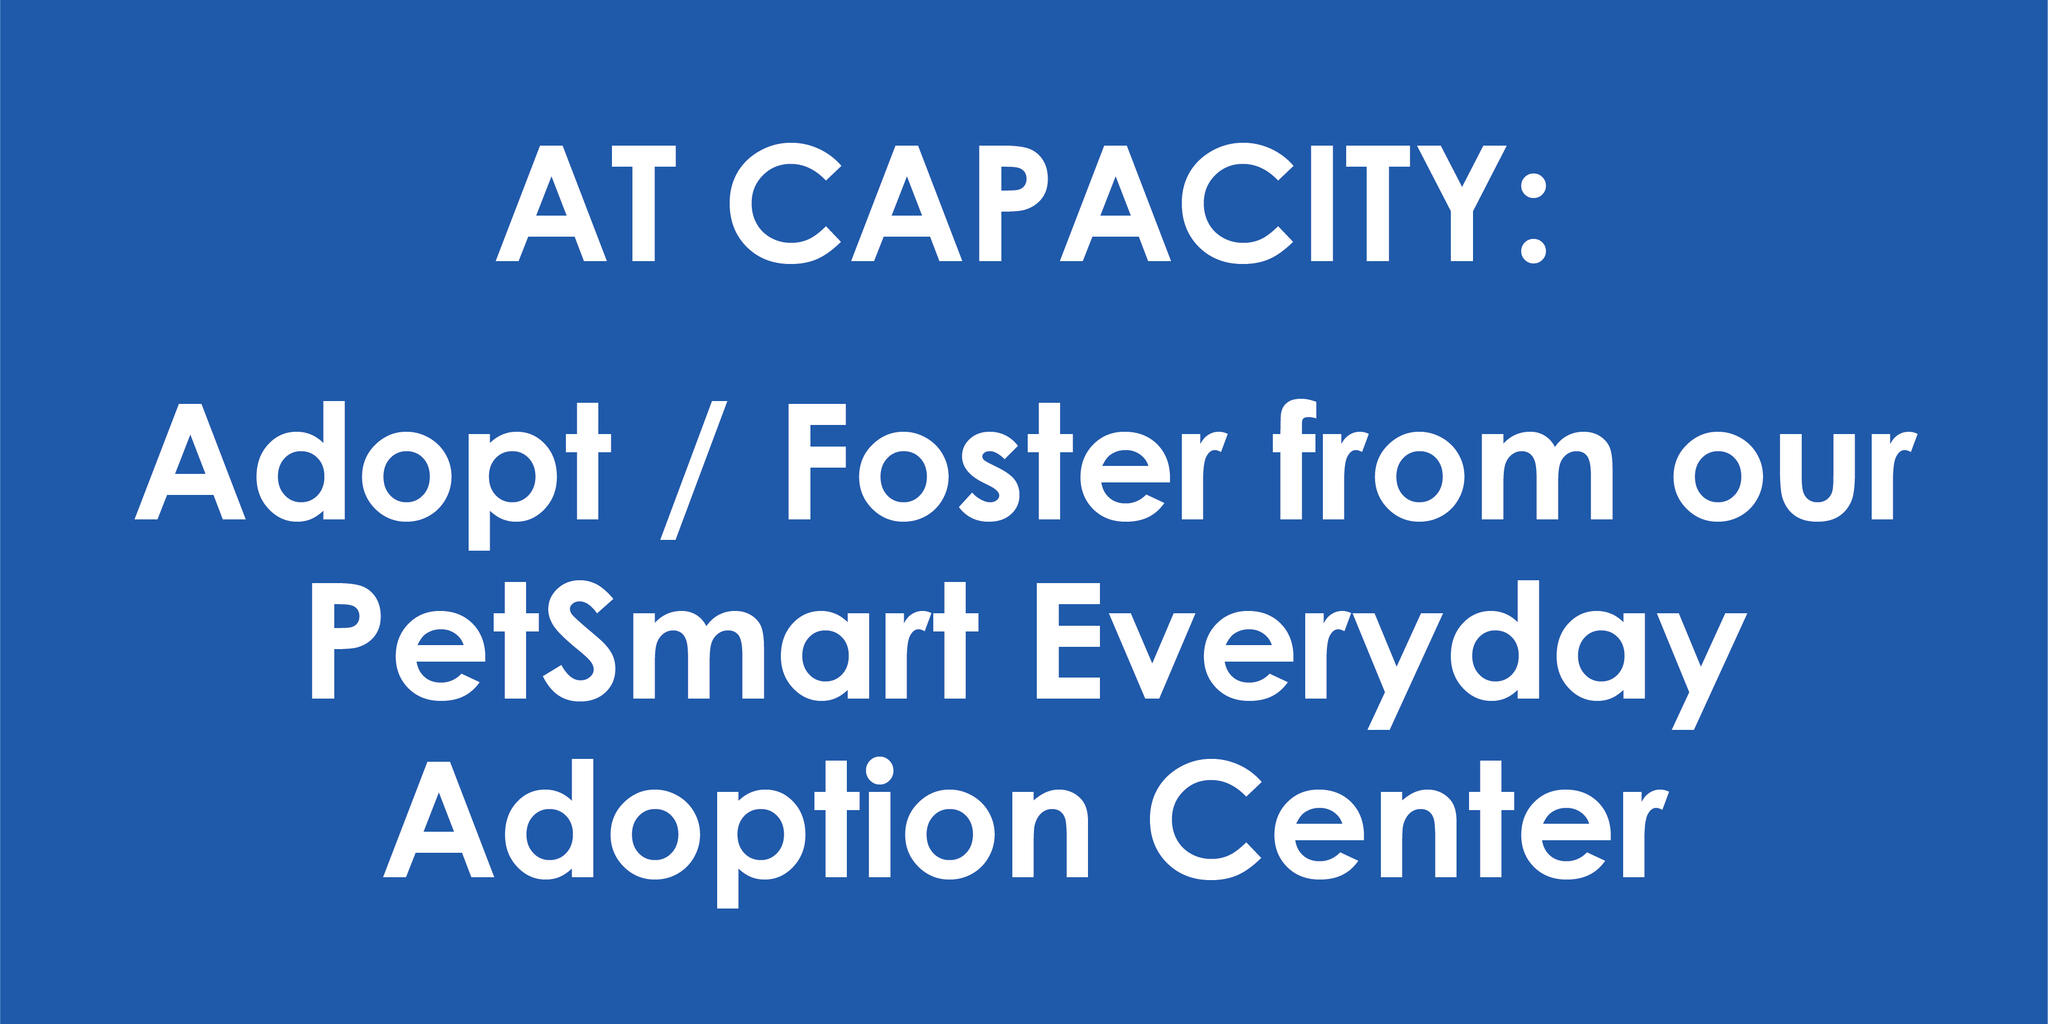 Petsmart Everyday Adoption Center